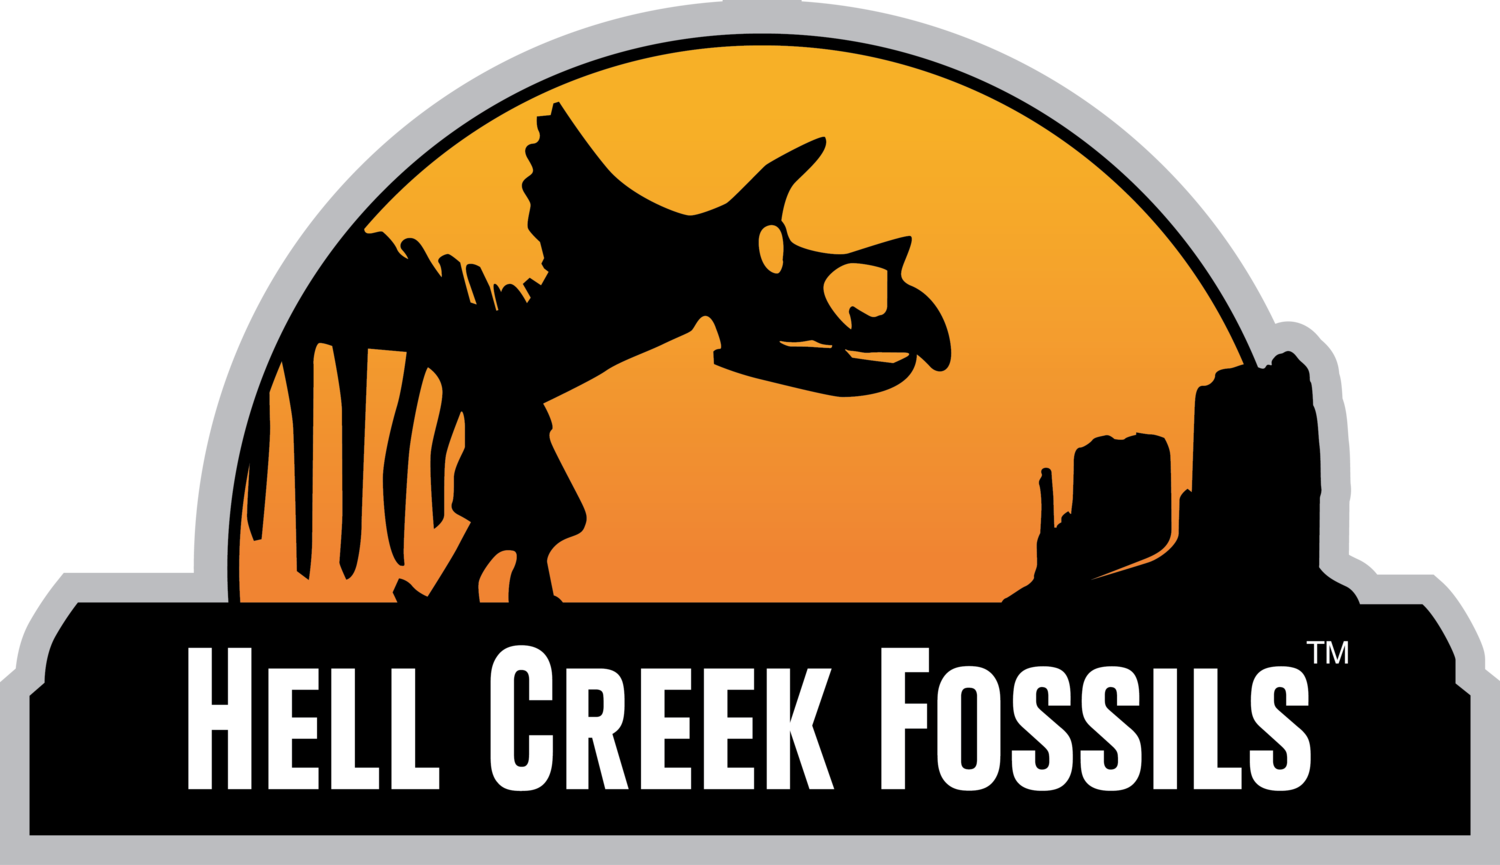 Hell Creek Fossils